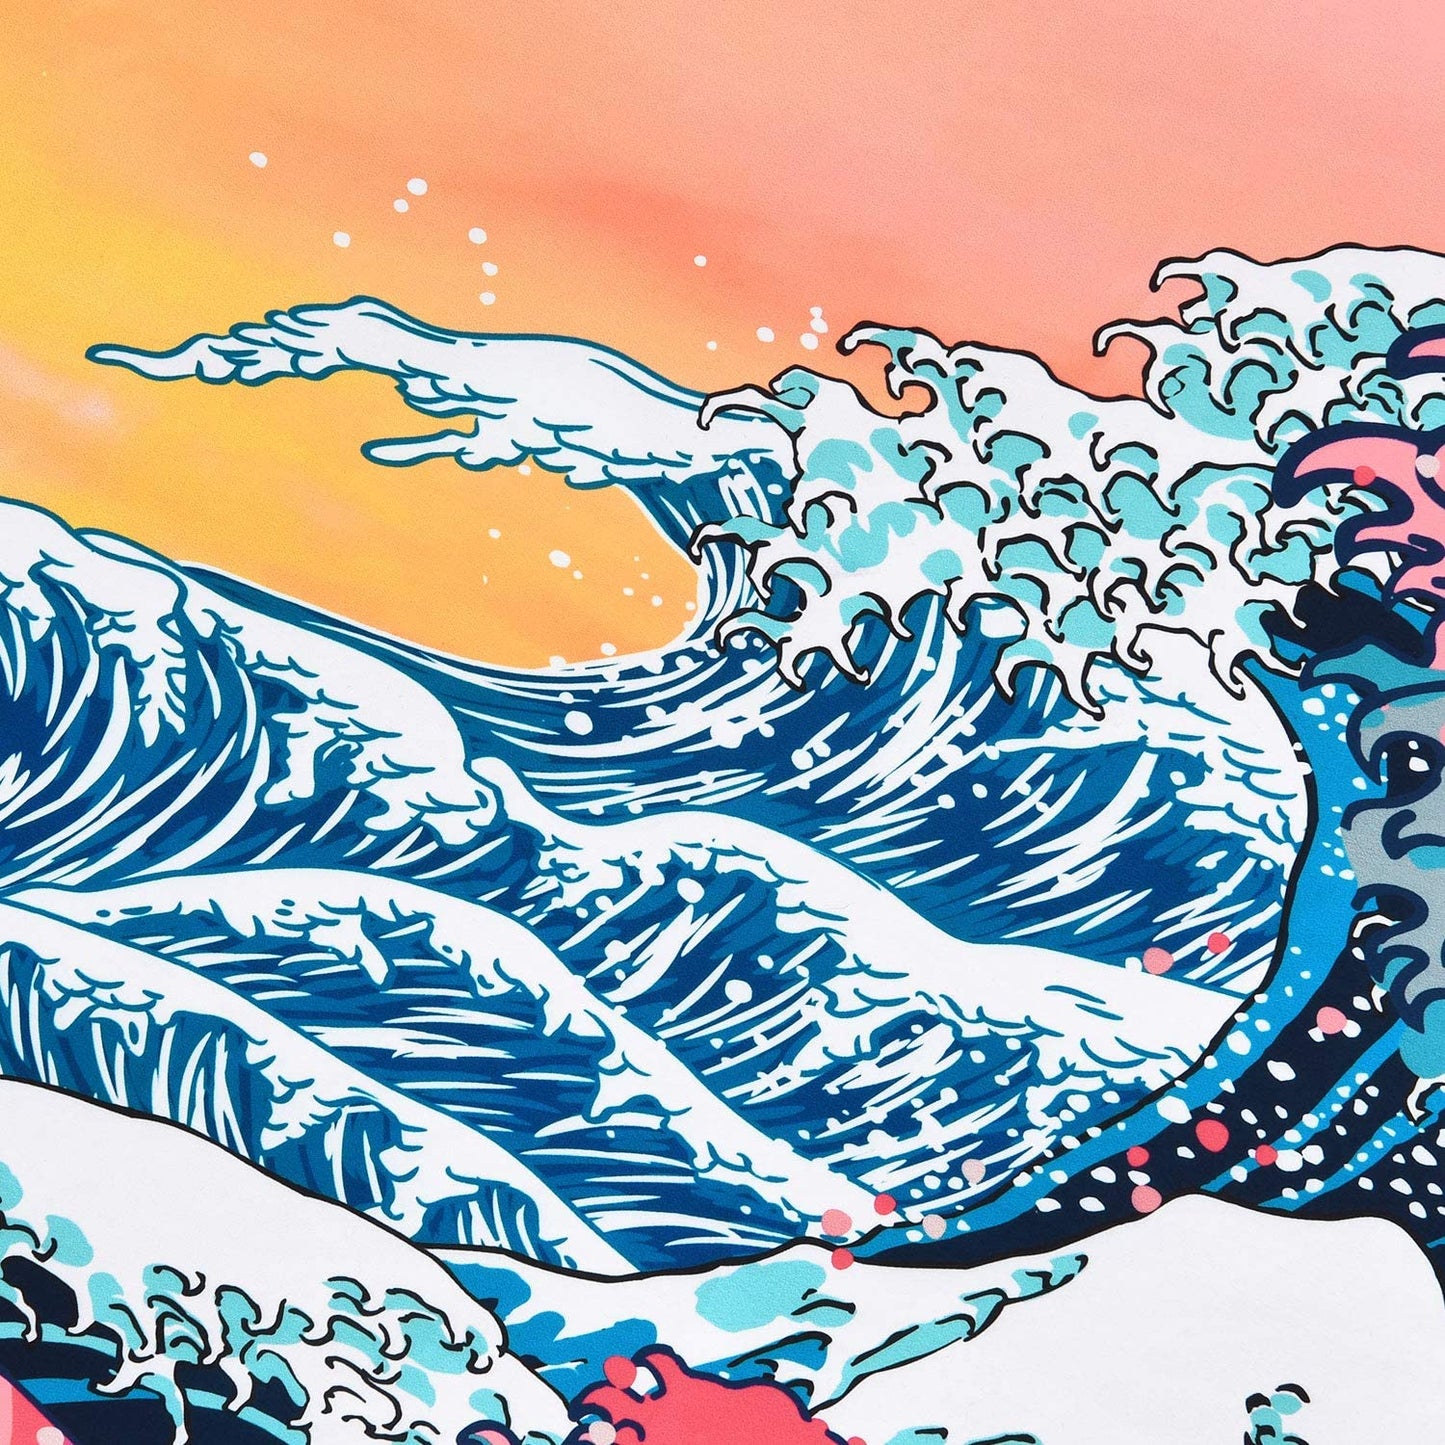 Sunsetaro - Vibrant Colors Ocean Serenity Tapestry